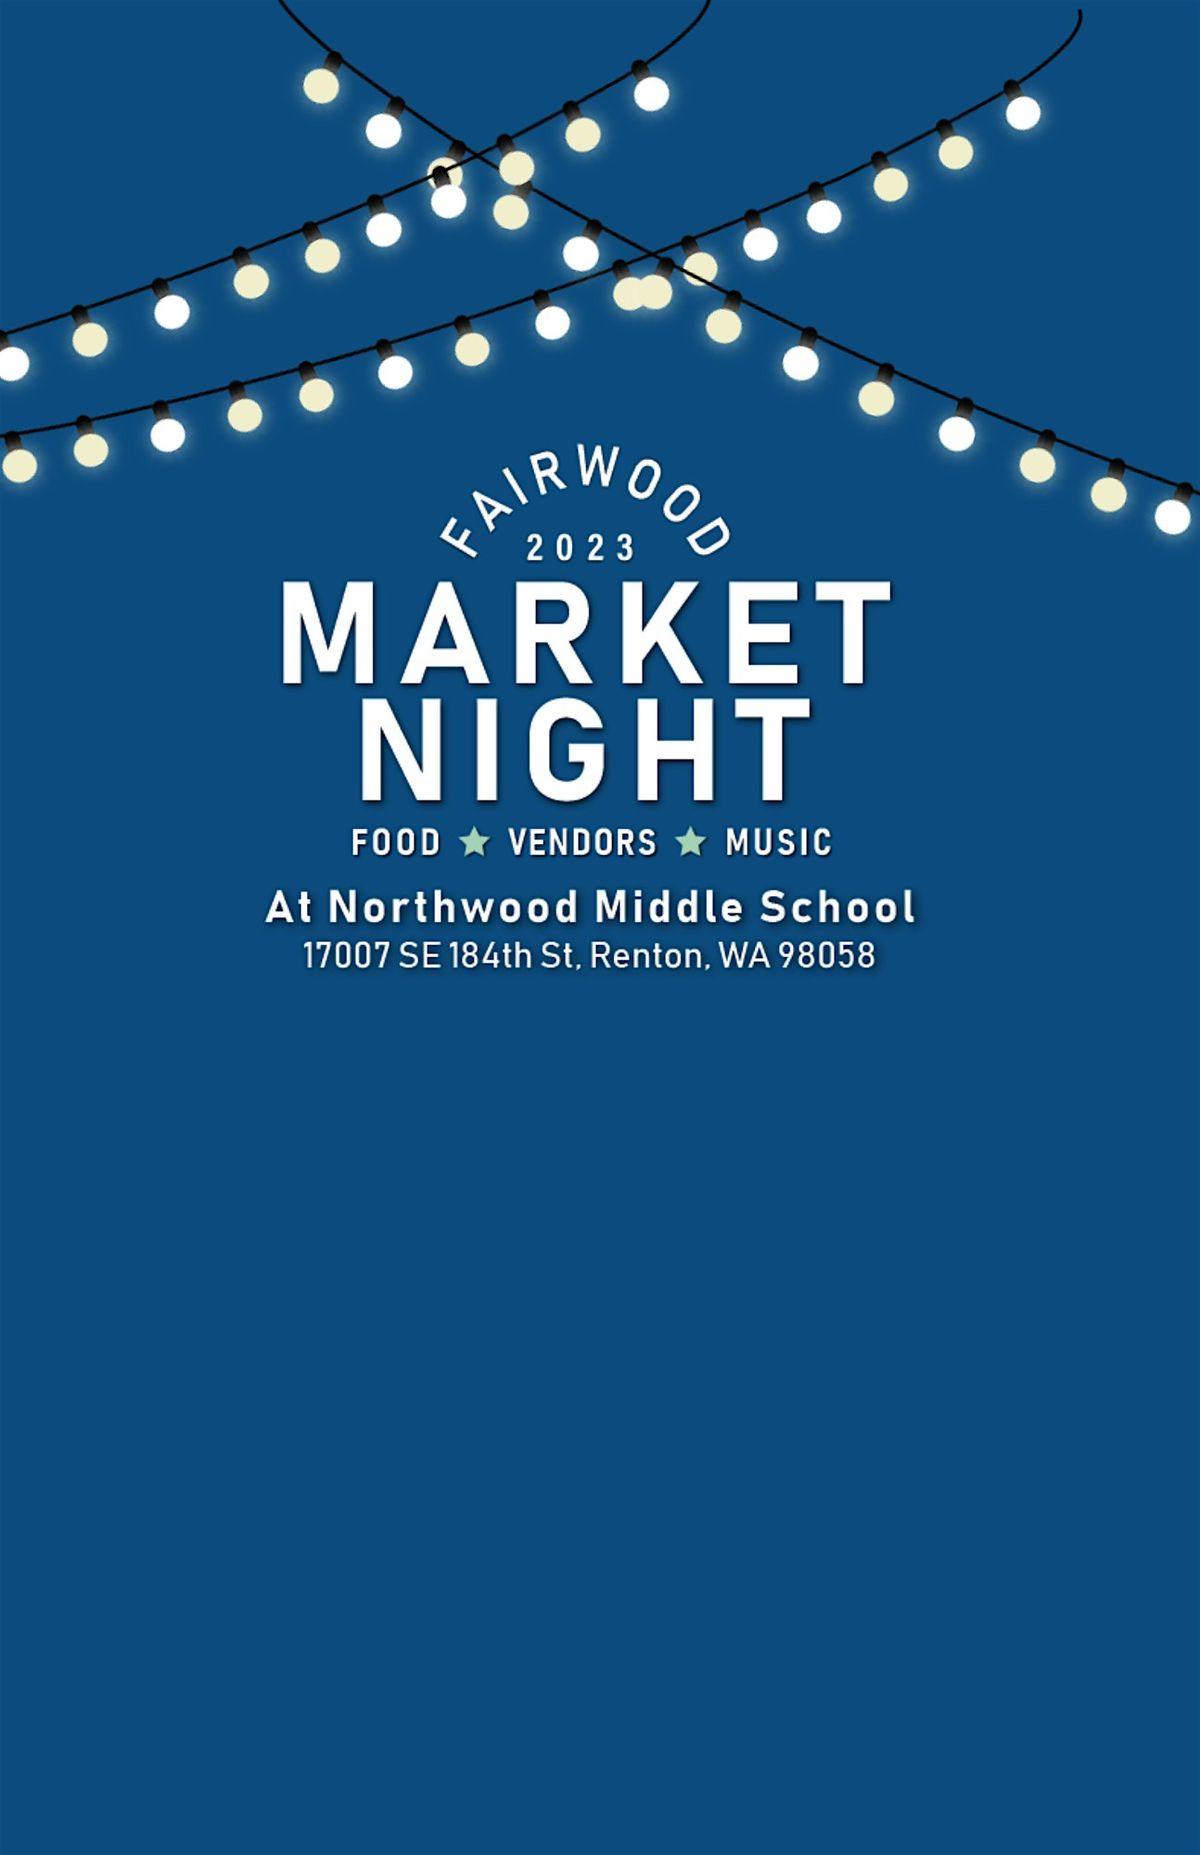 Fairwood Market Night - May 8 (4pm - 8pm)